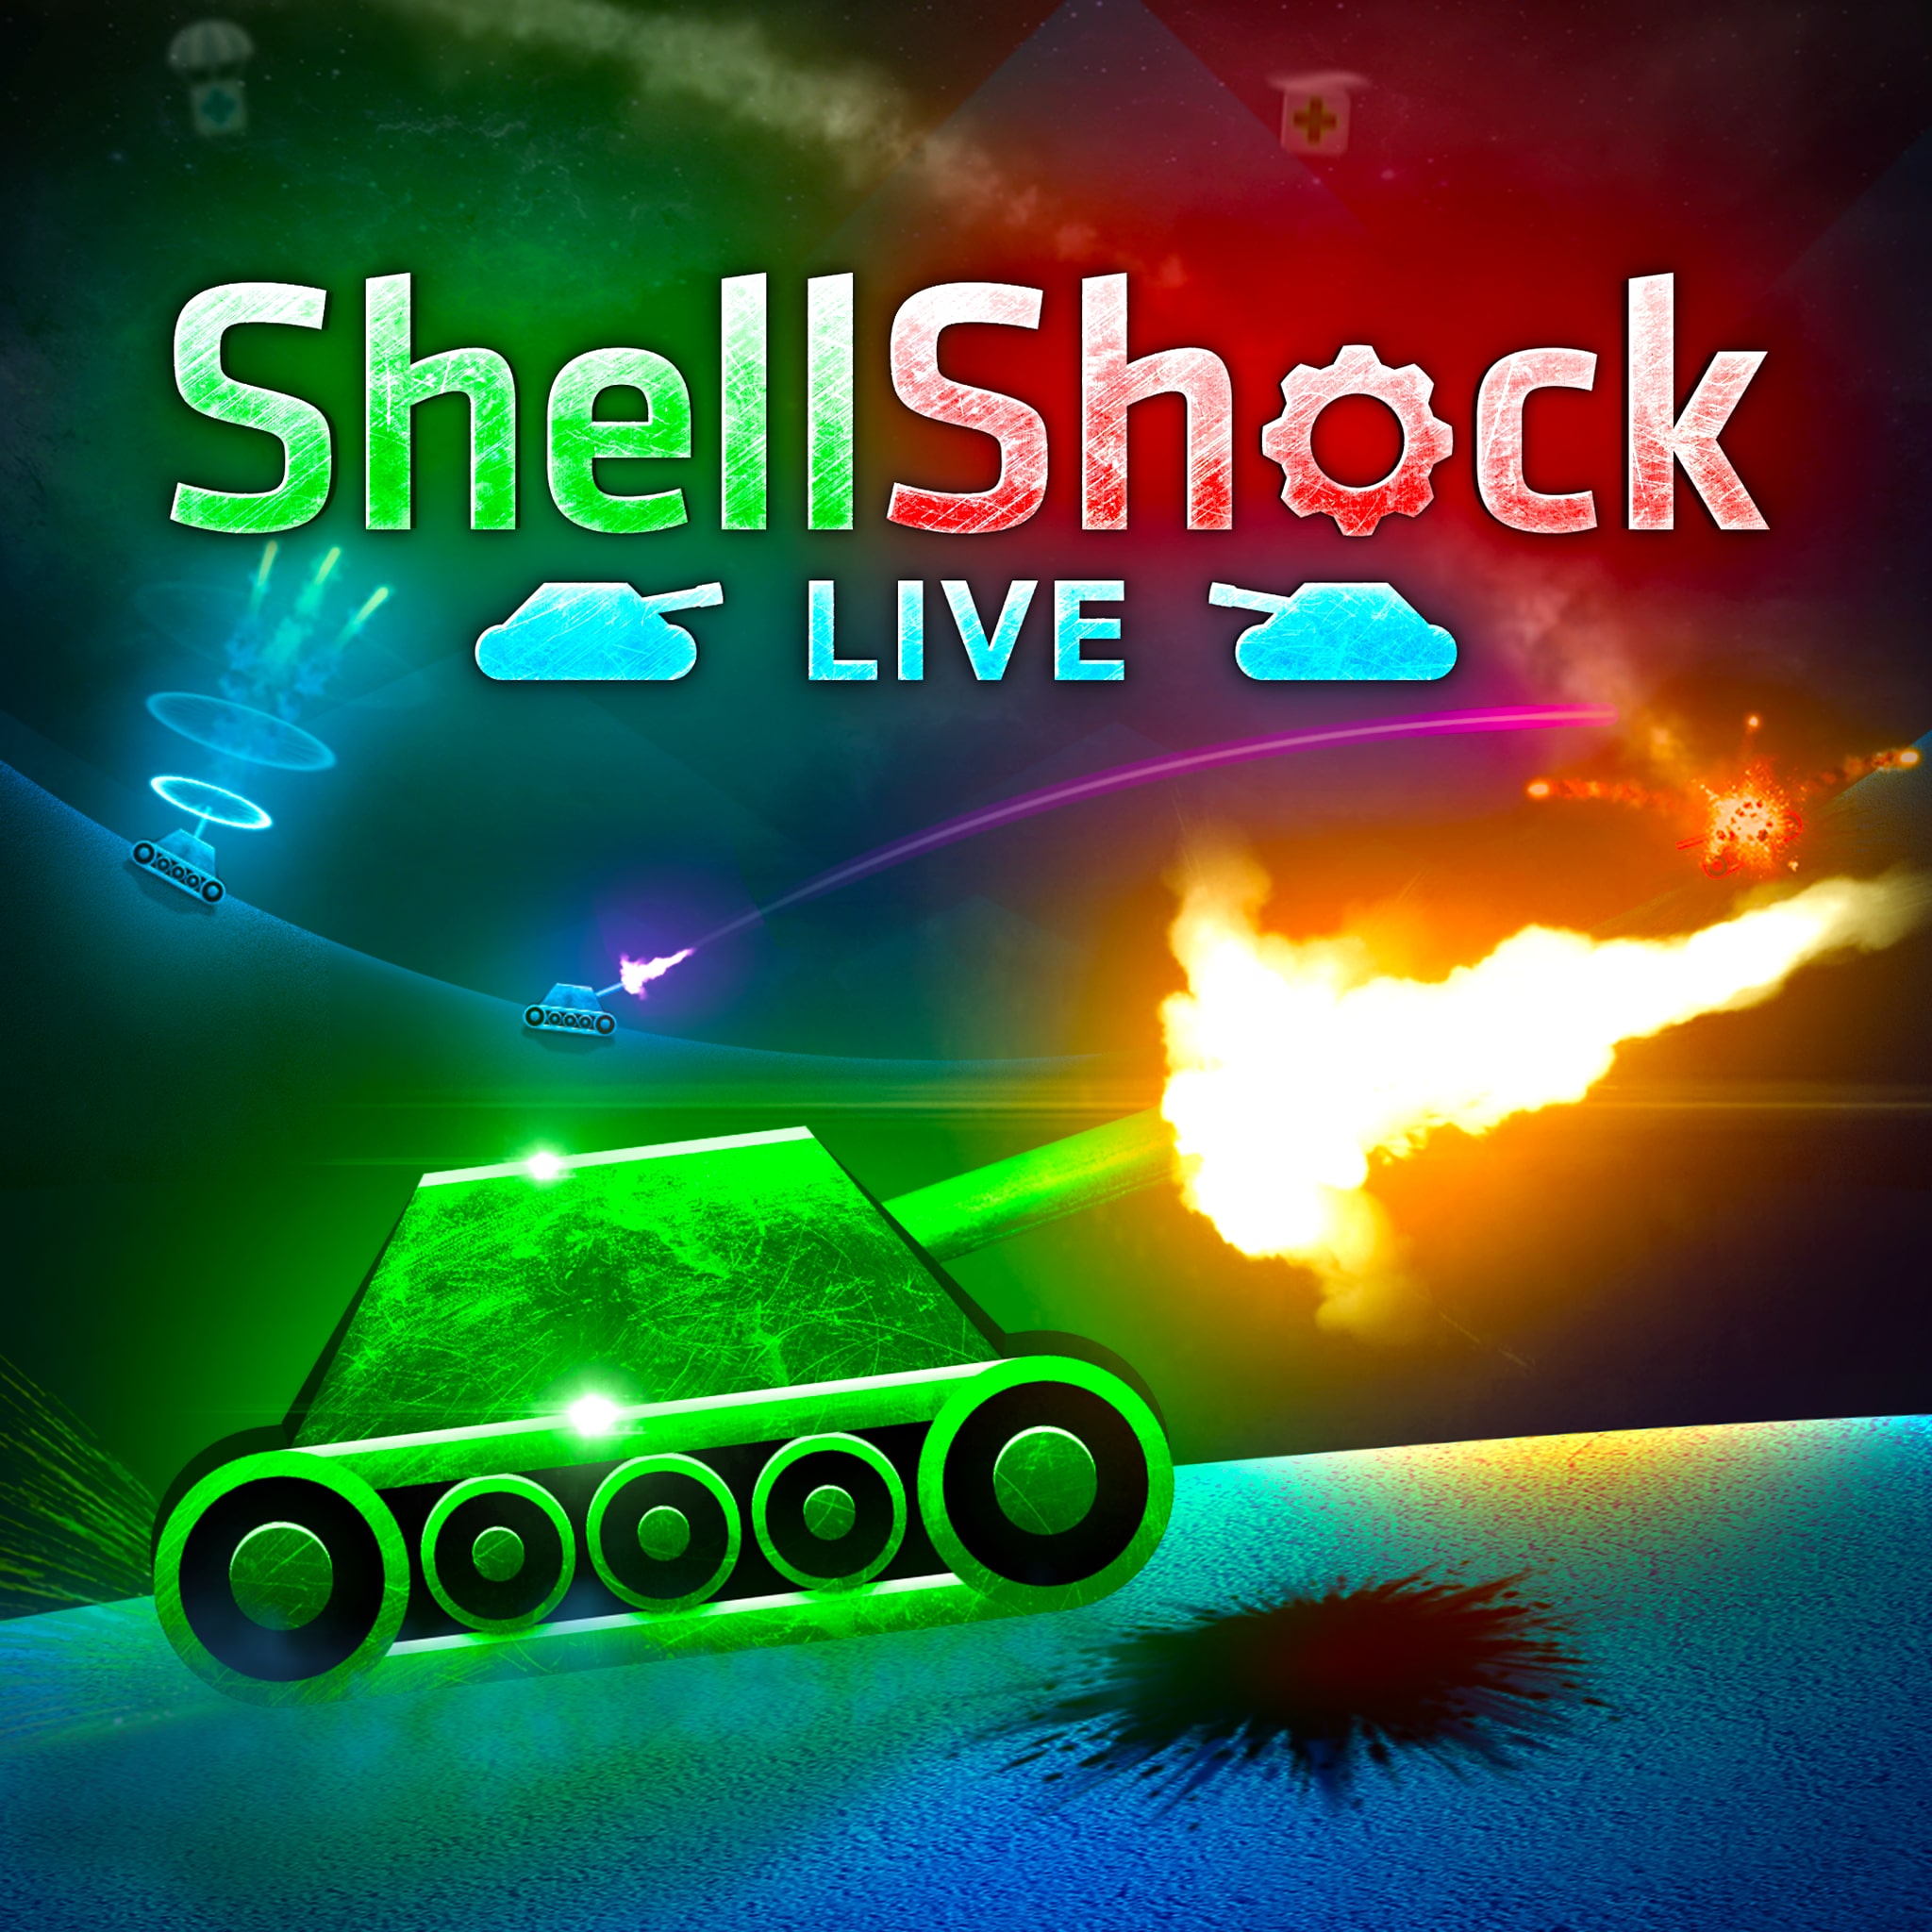 Shellshock Videos for PlayStation - GameFAQs